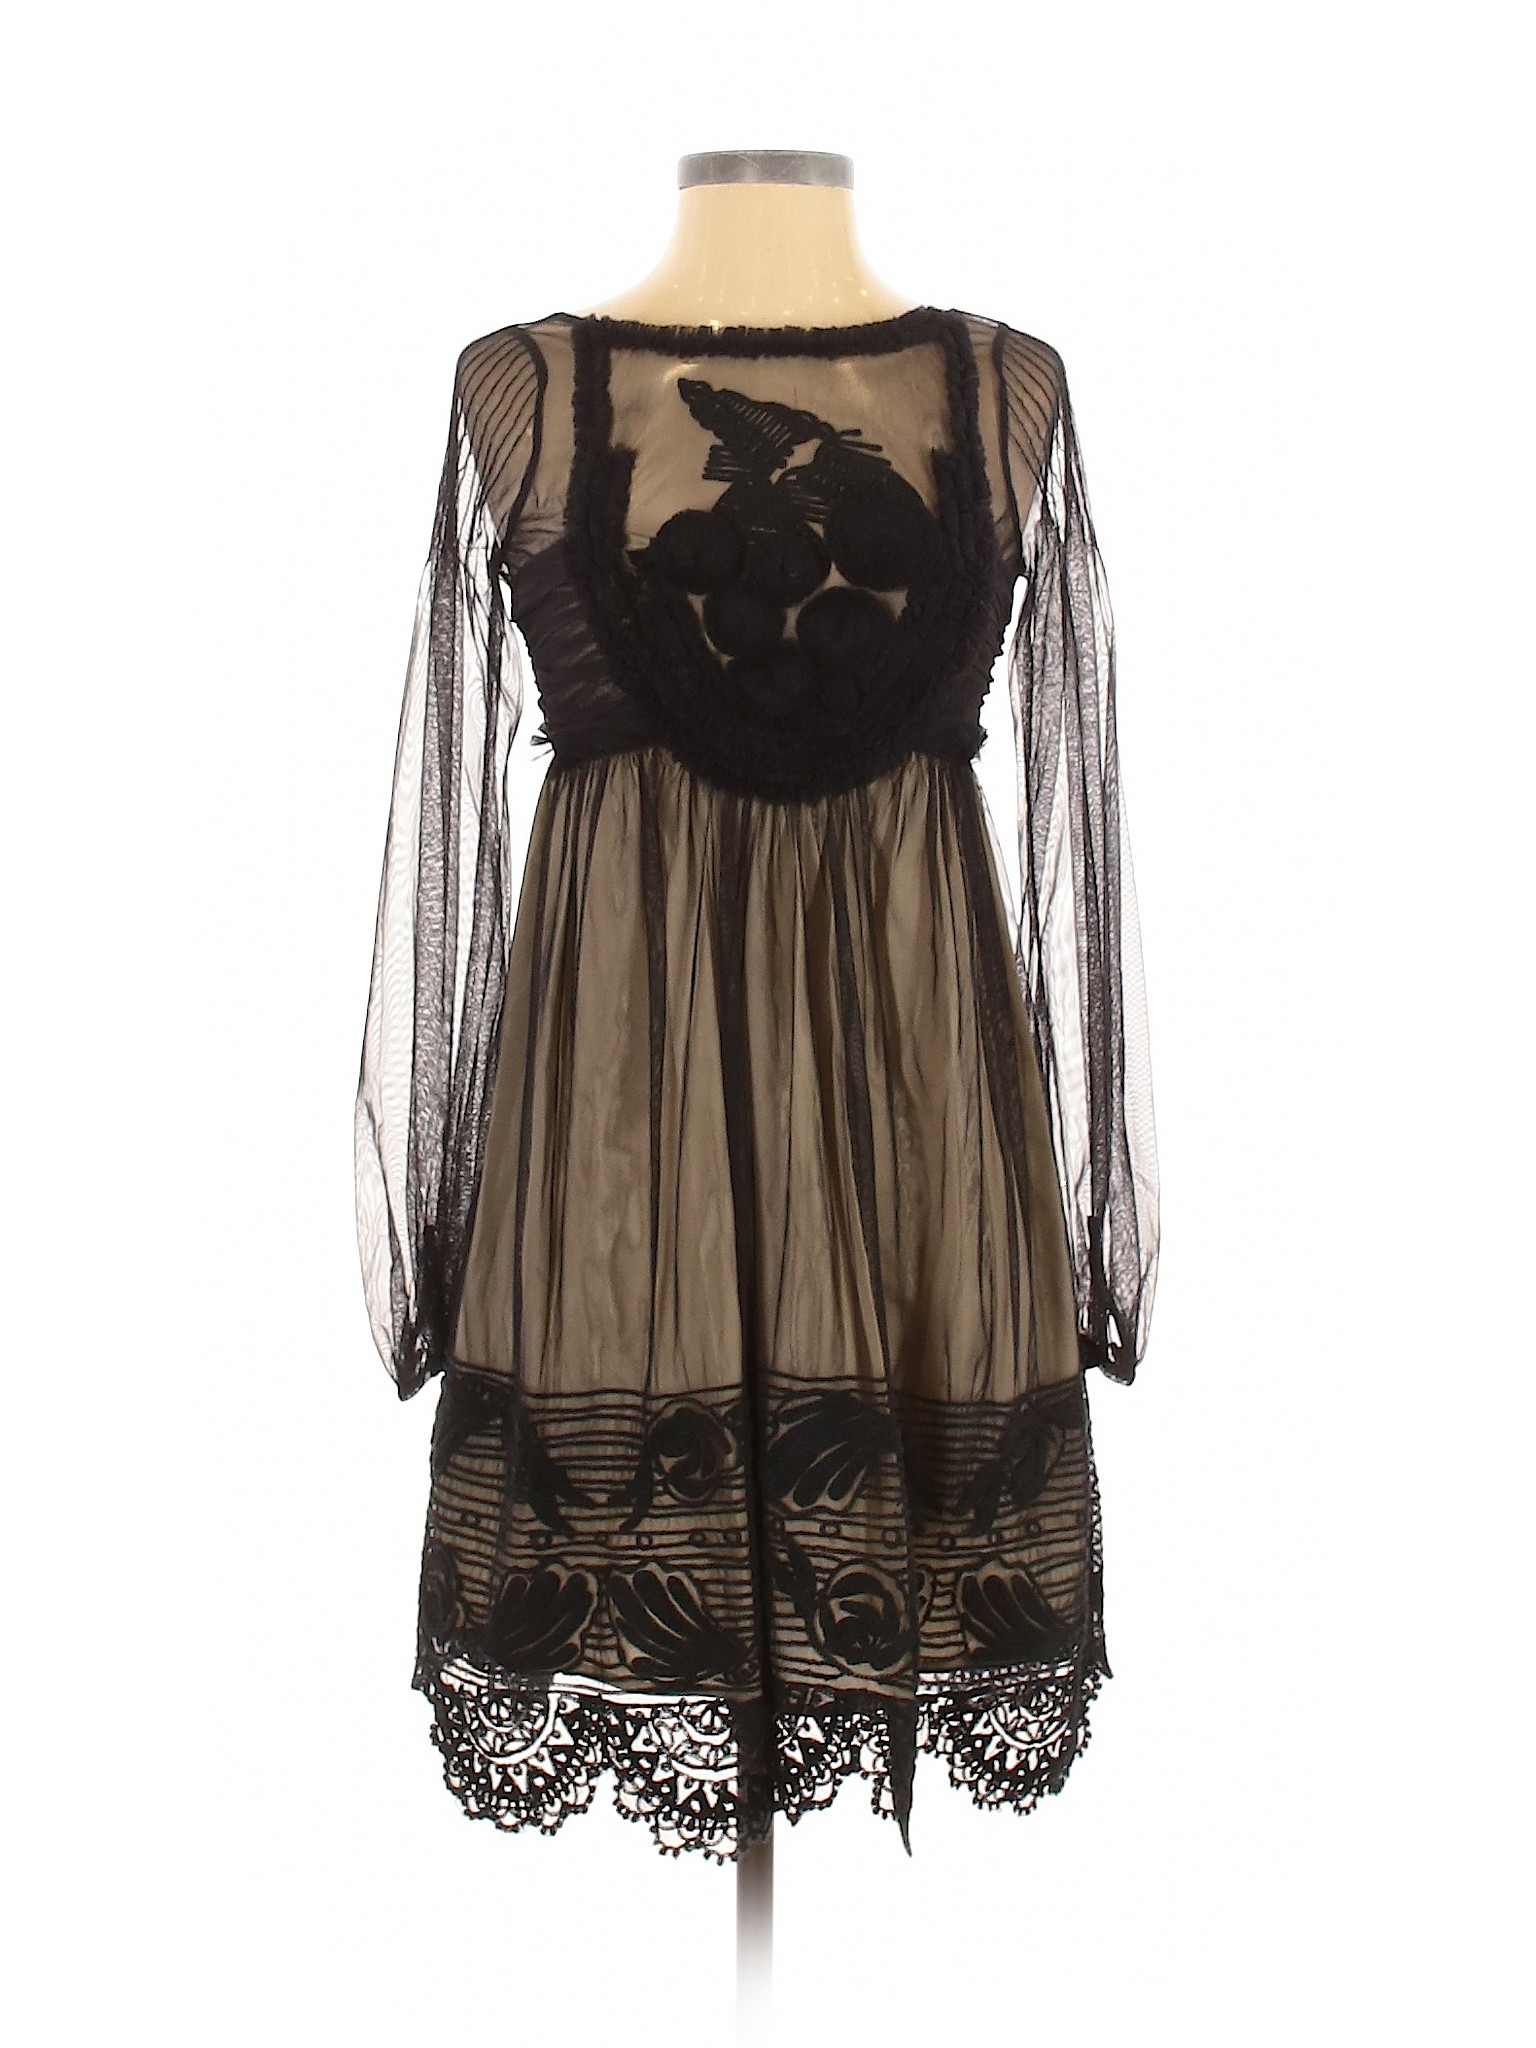 NWT Hoss Intropia Women Black Cocktail Dress 38 french | eBay